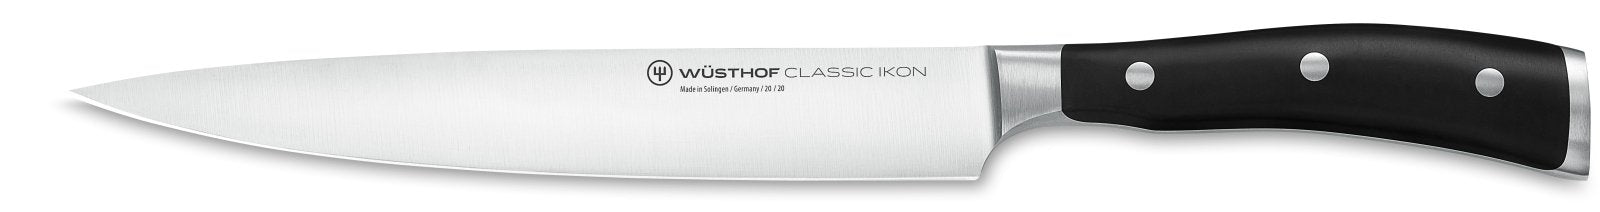 Wusthof Classic IKON 3 Piece Set - WT1120360301 - The Cotswold Knife Company